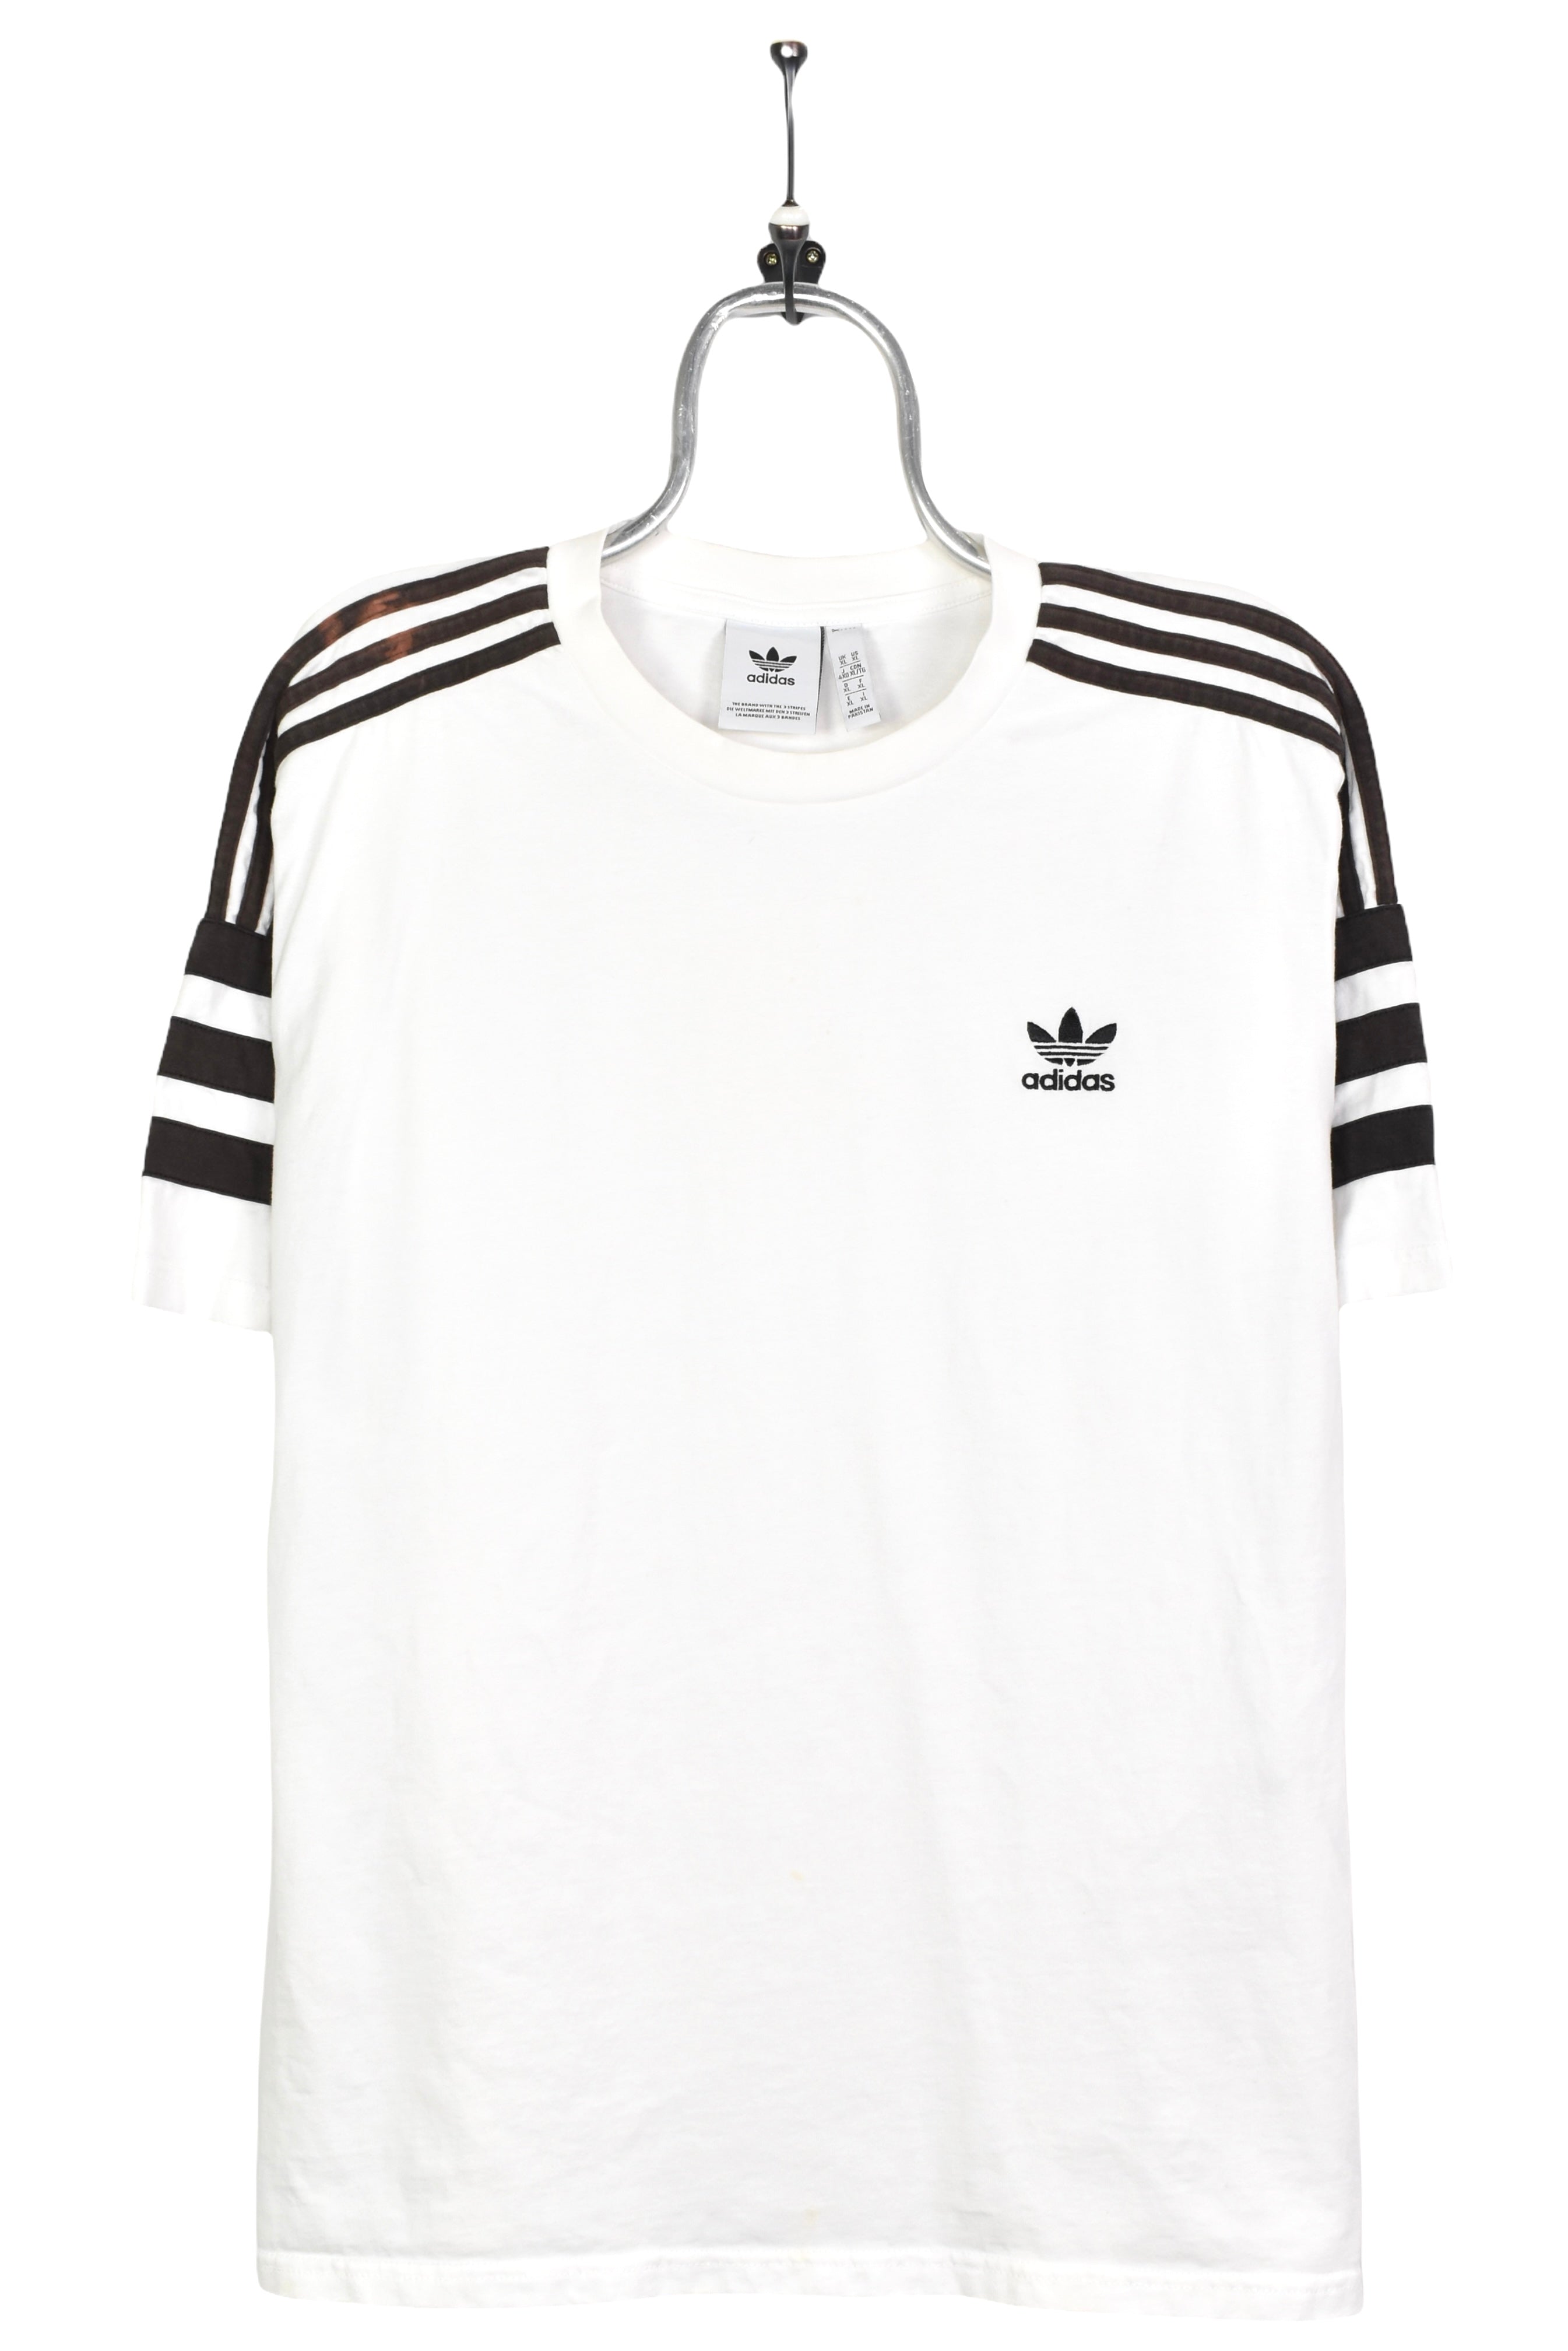 Vintage Adidas shirt, embroidered tee - large, white ADIDAS